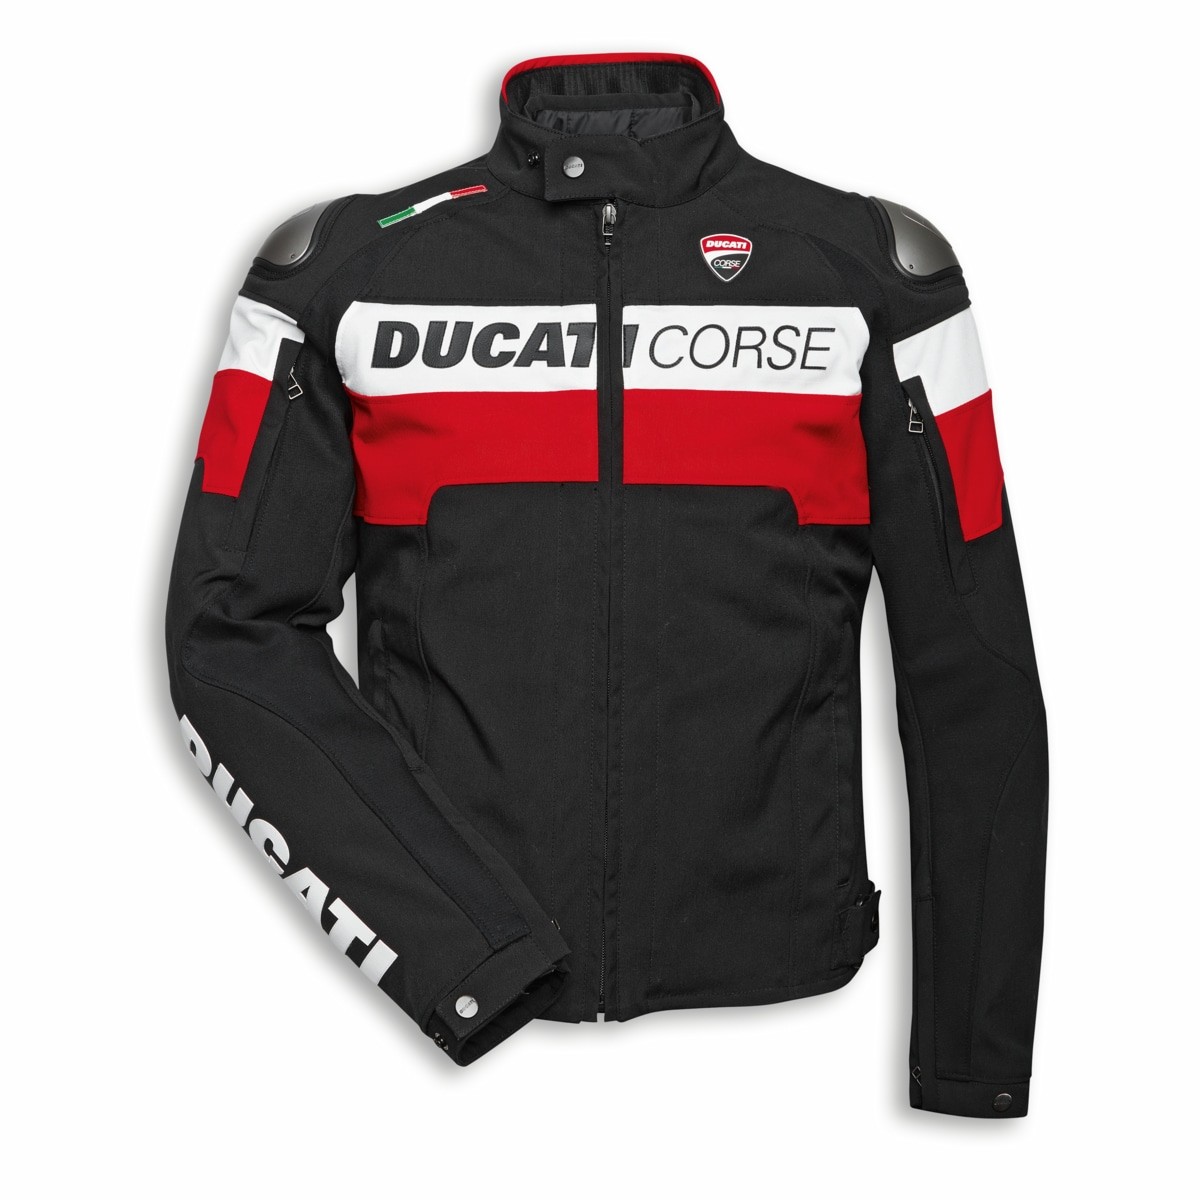 Ducati Corse tex C5 - Fabric jacket